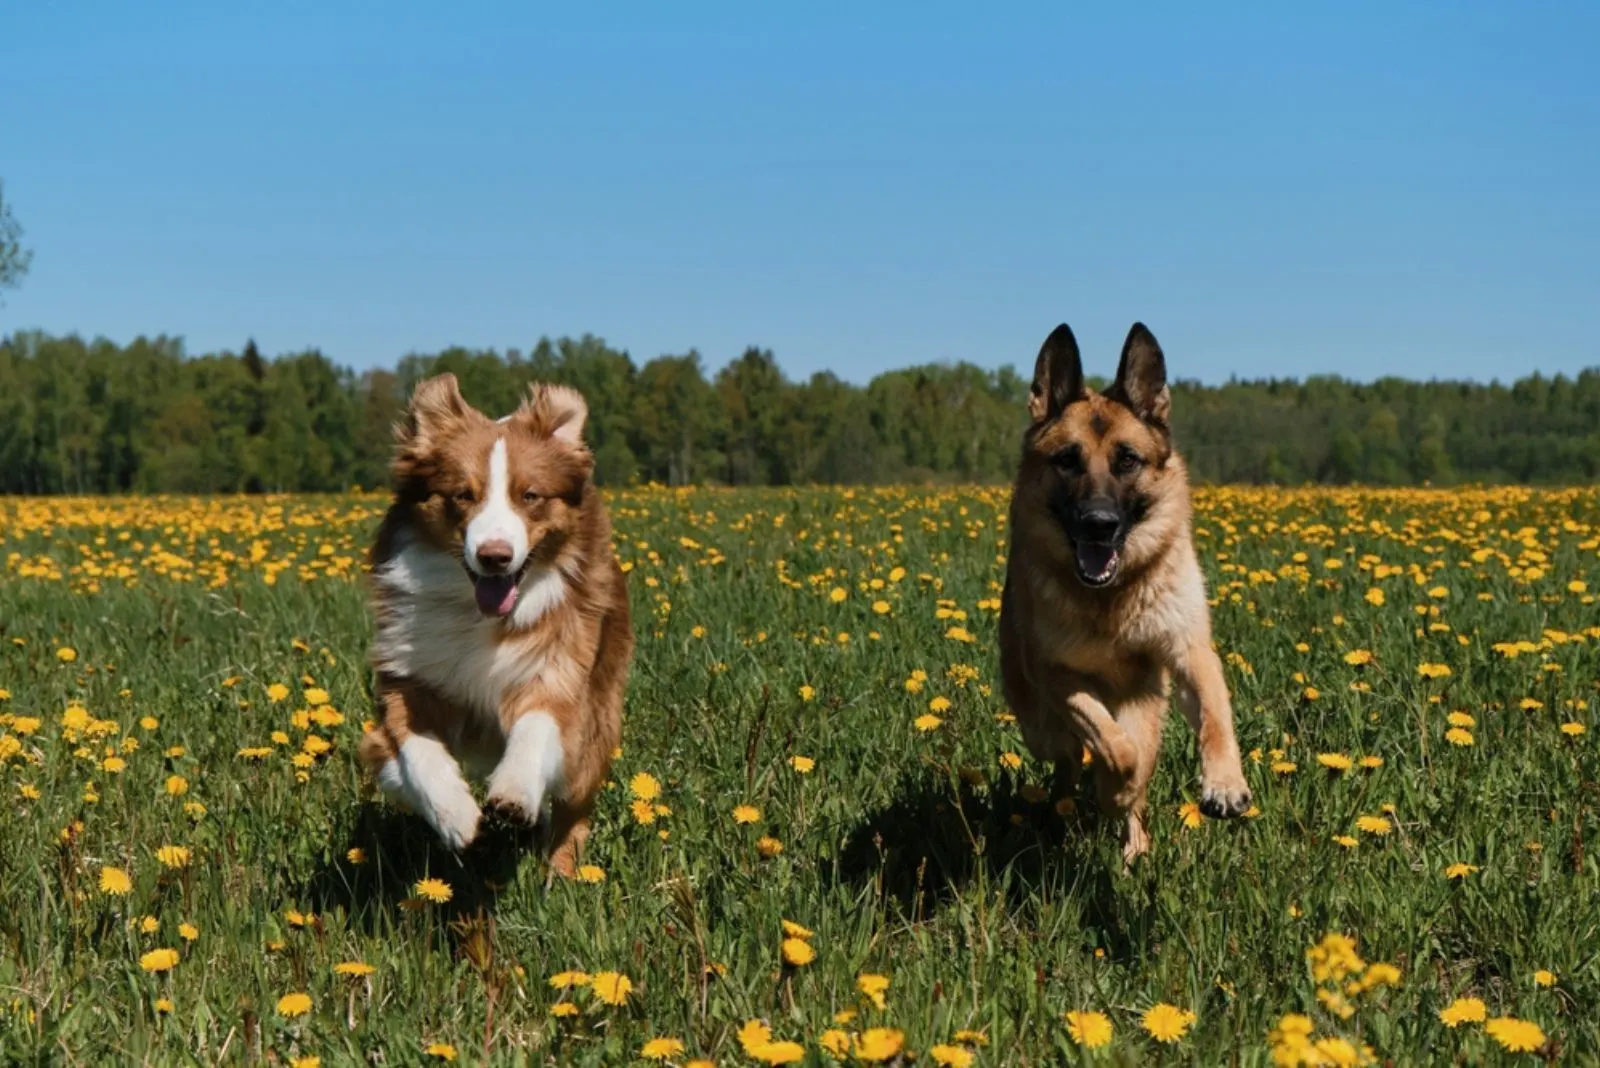 German and Australian Shepherd dogs are running merrily in field of yellow dandelions